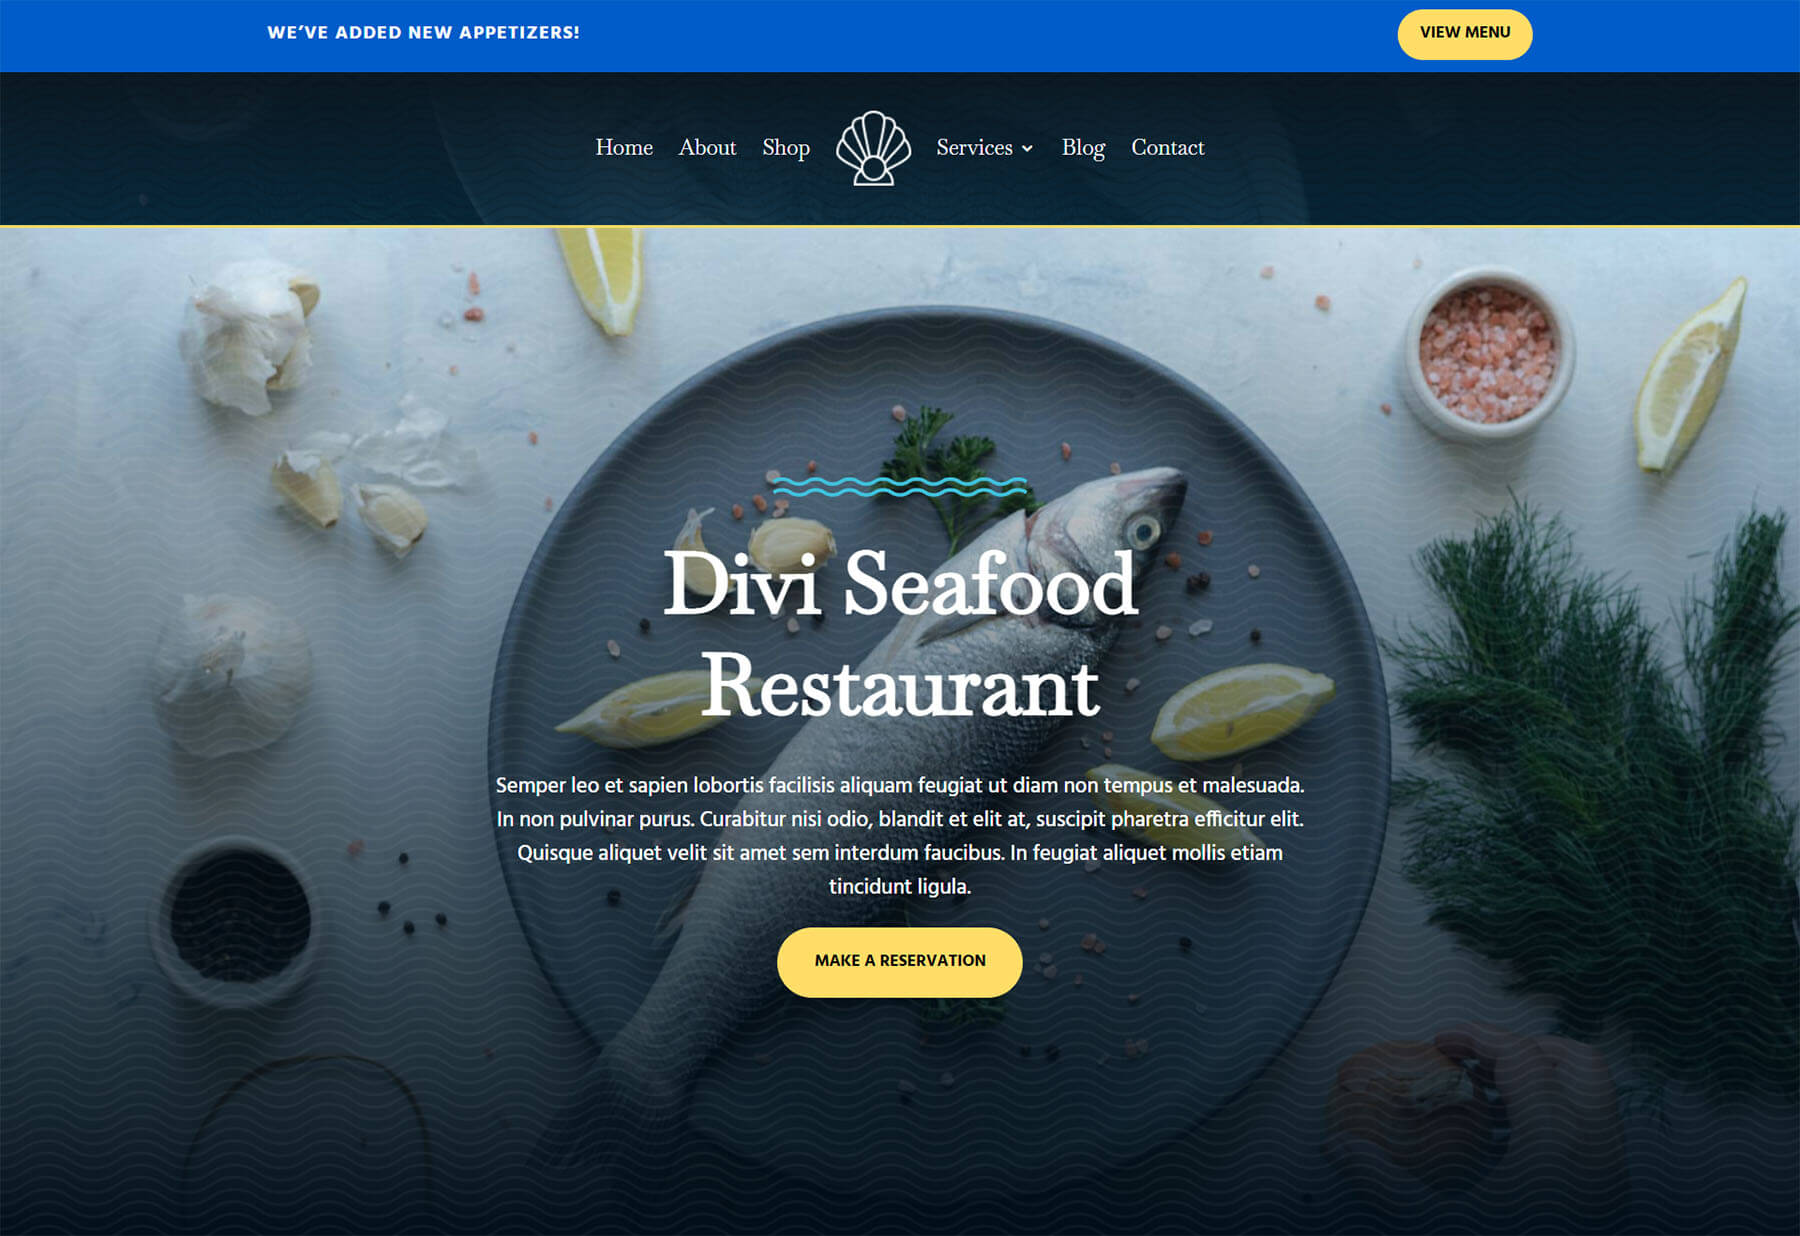 Divi Seafood Restaurant Header design desktop view